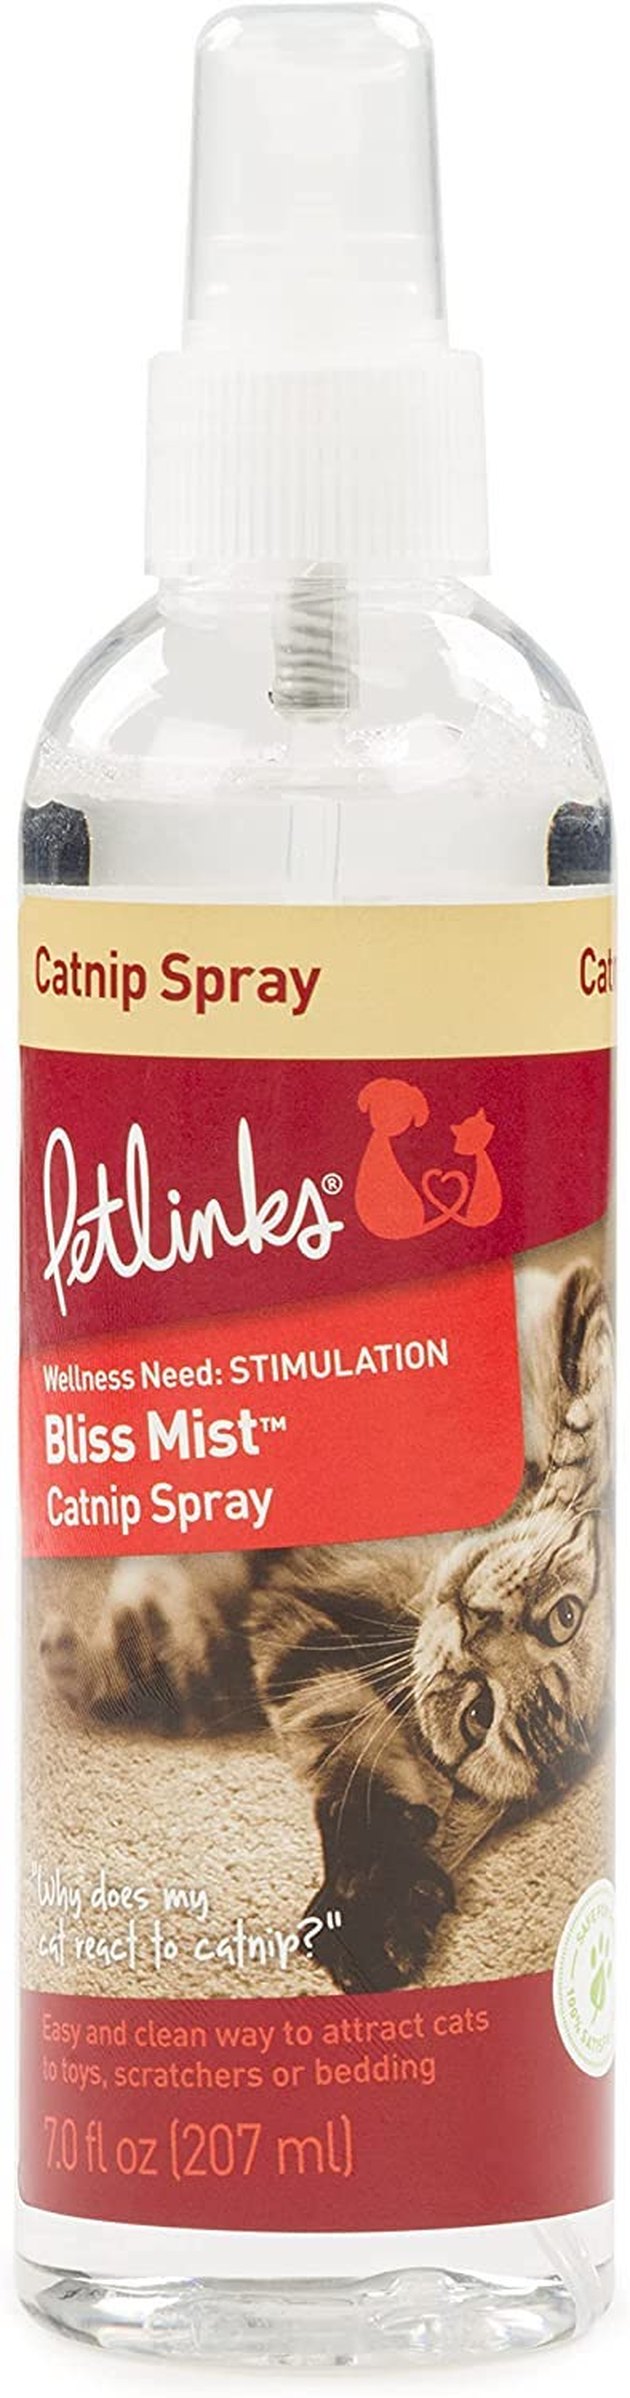 Vitakraft Catnip Spray - Miscota United States of America